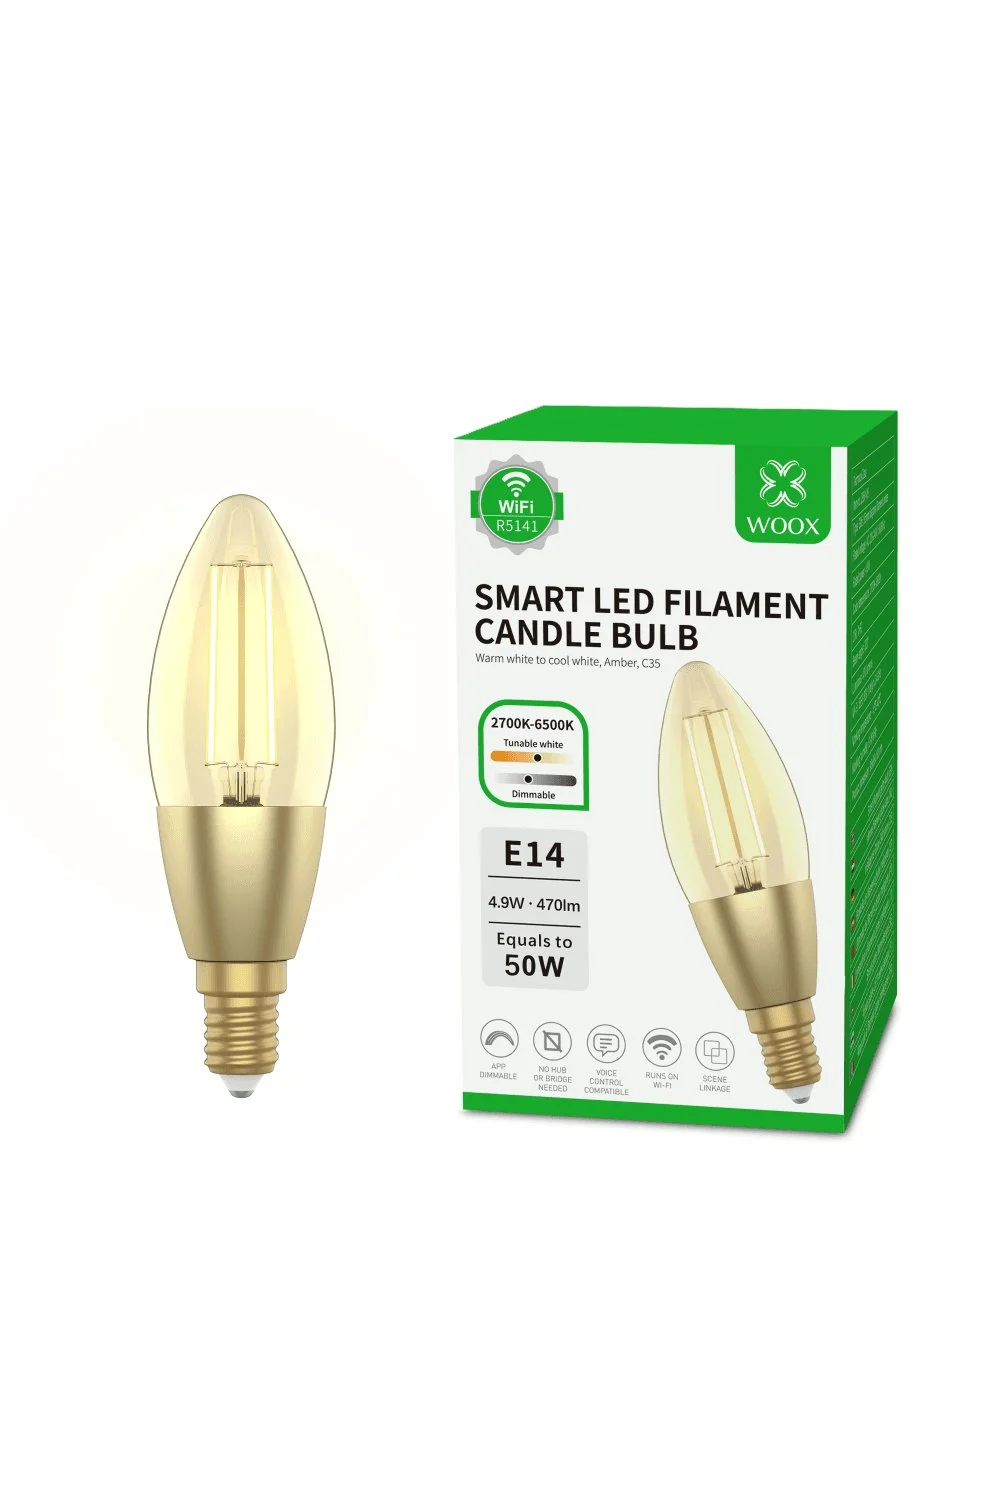 Woox смарт крушка Light - R5141 - WiFi Smart Filament Candle Blub E14 Type C37, 4.9W/50W, 470lm - image 4